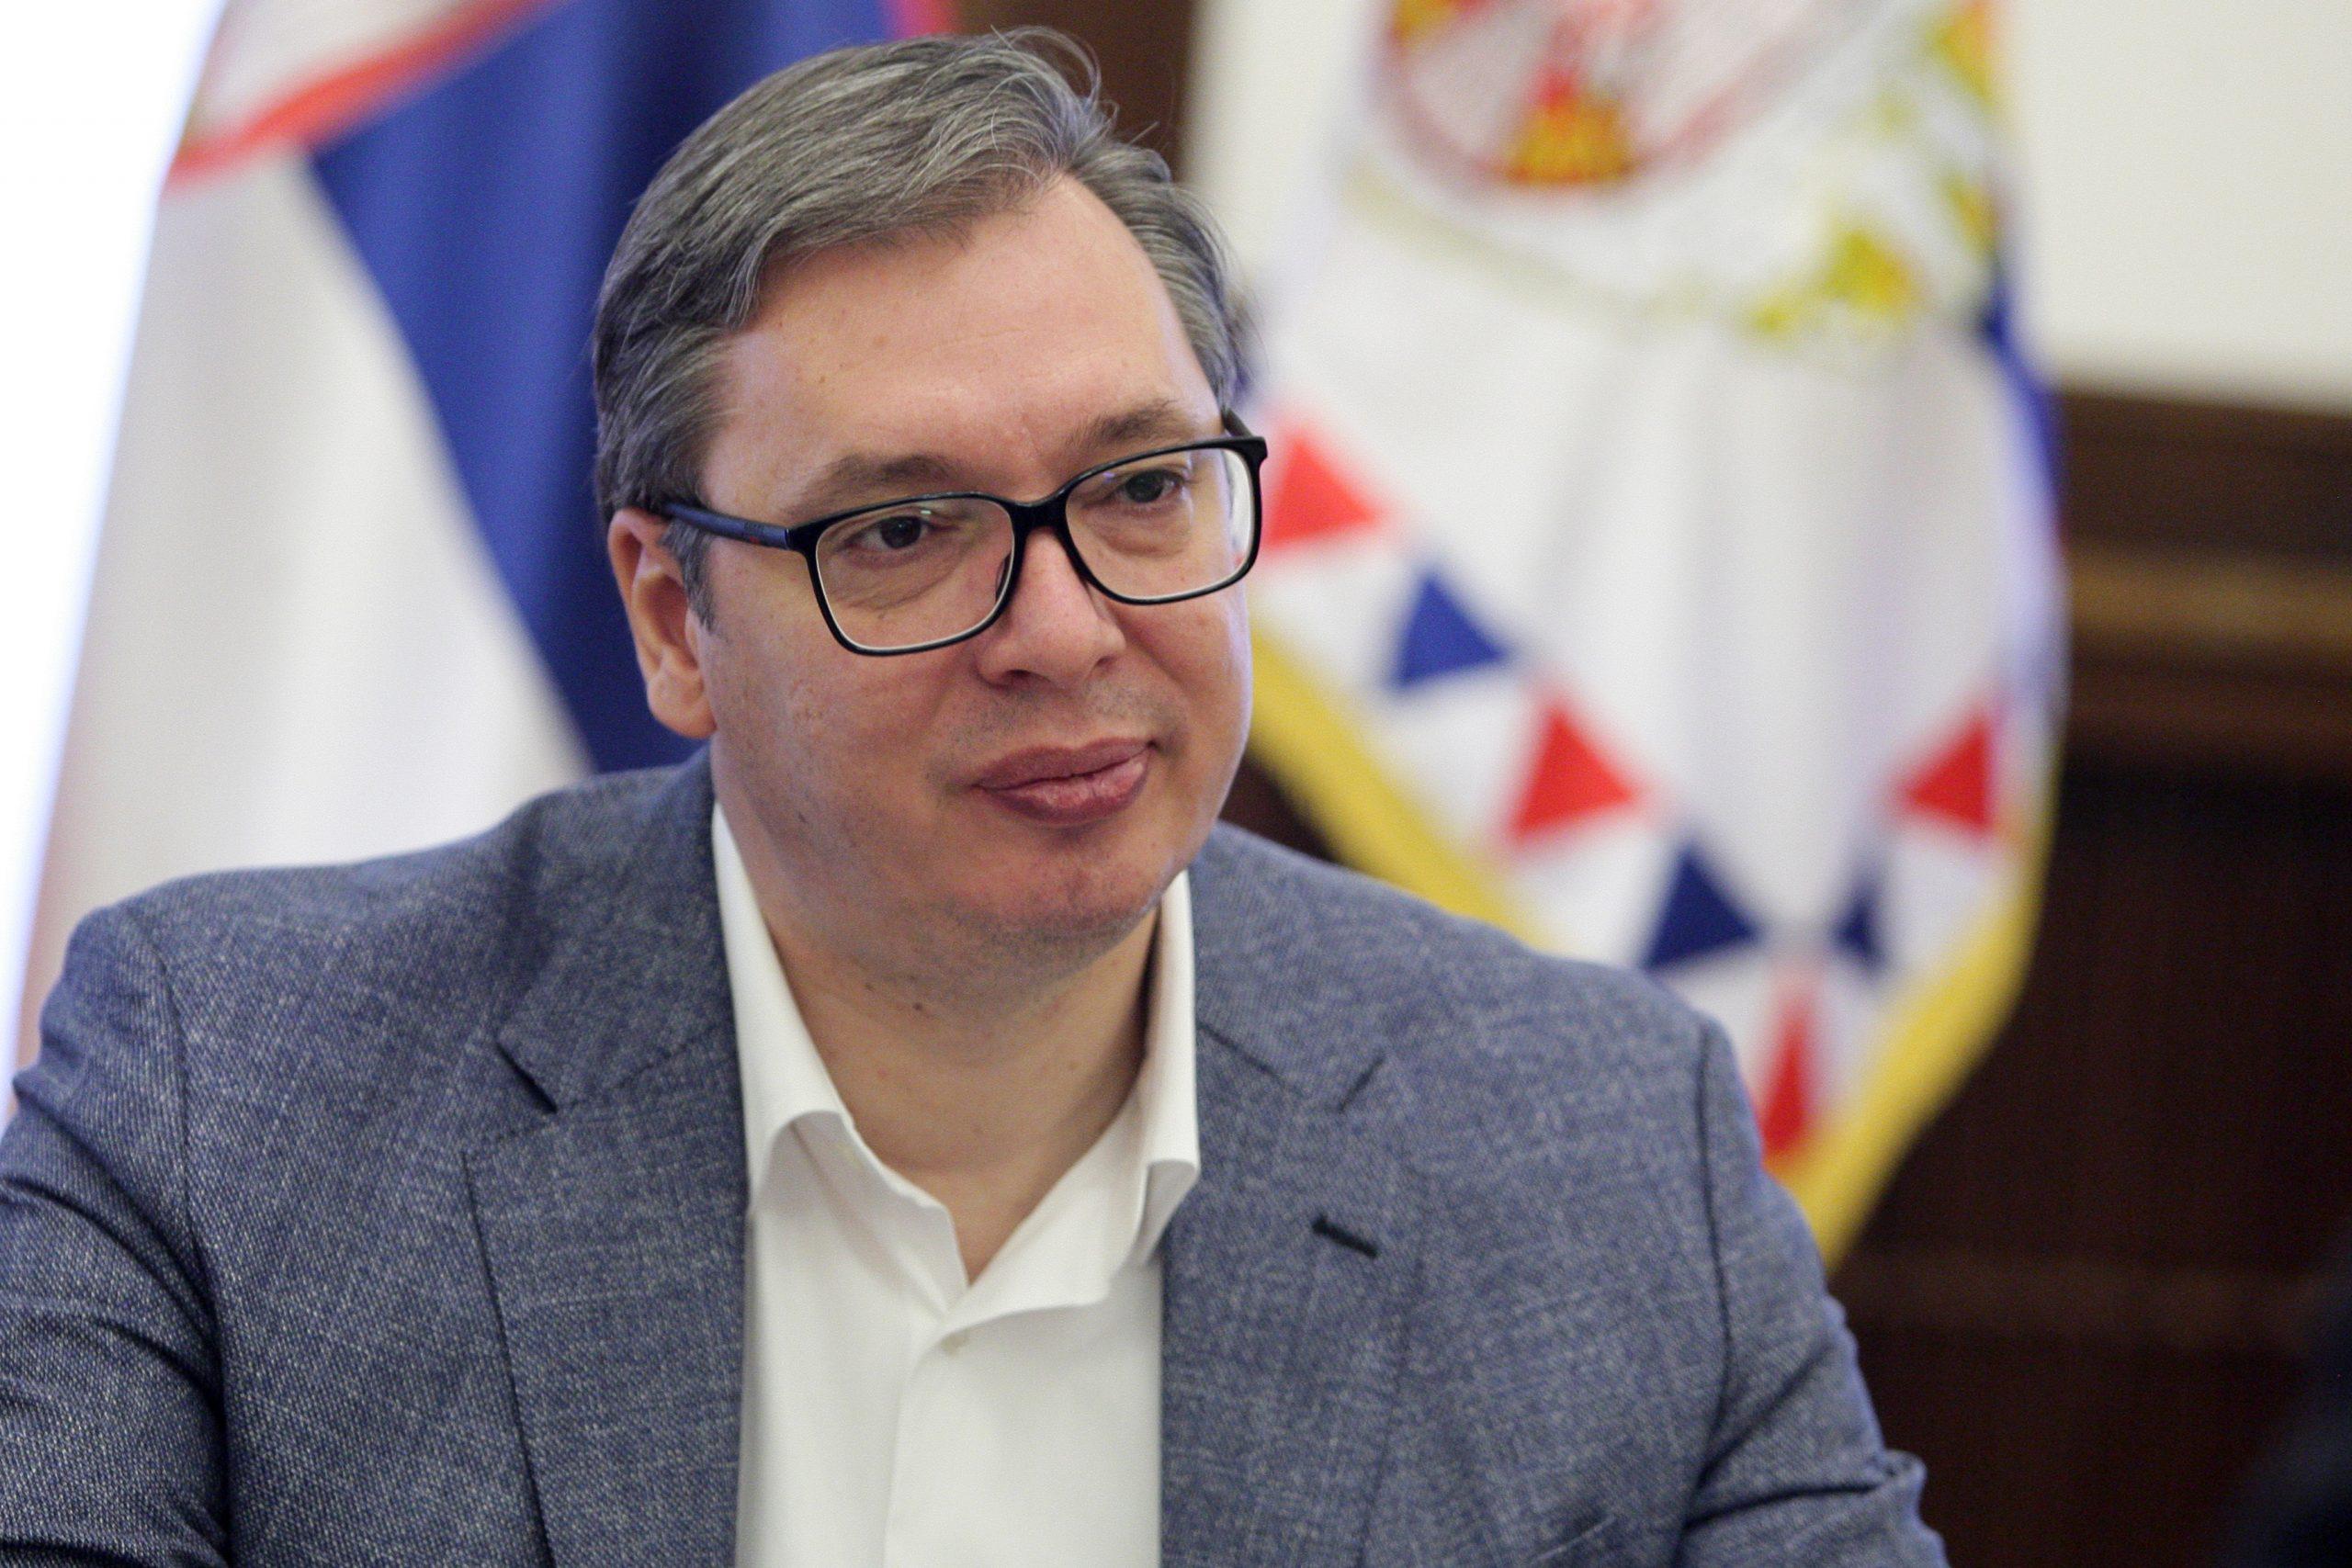 Predsjednik Srbije Aleksandar Vučić - Avaz